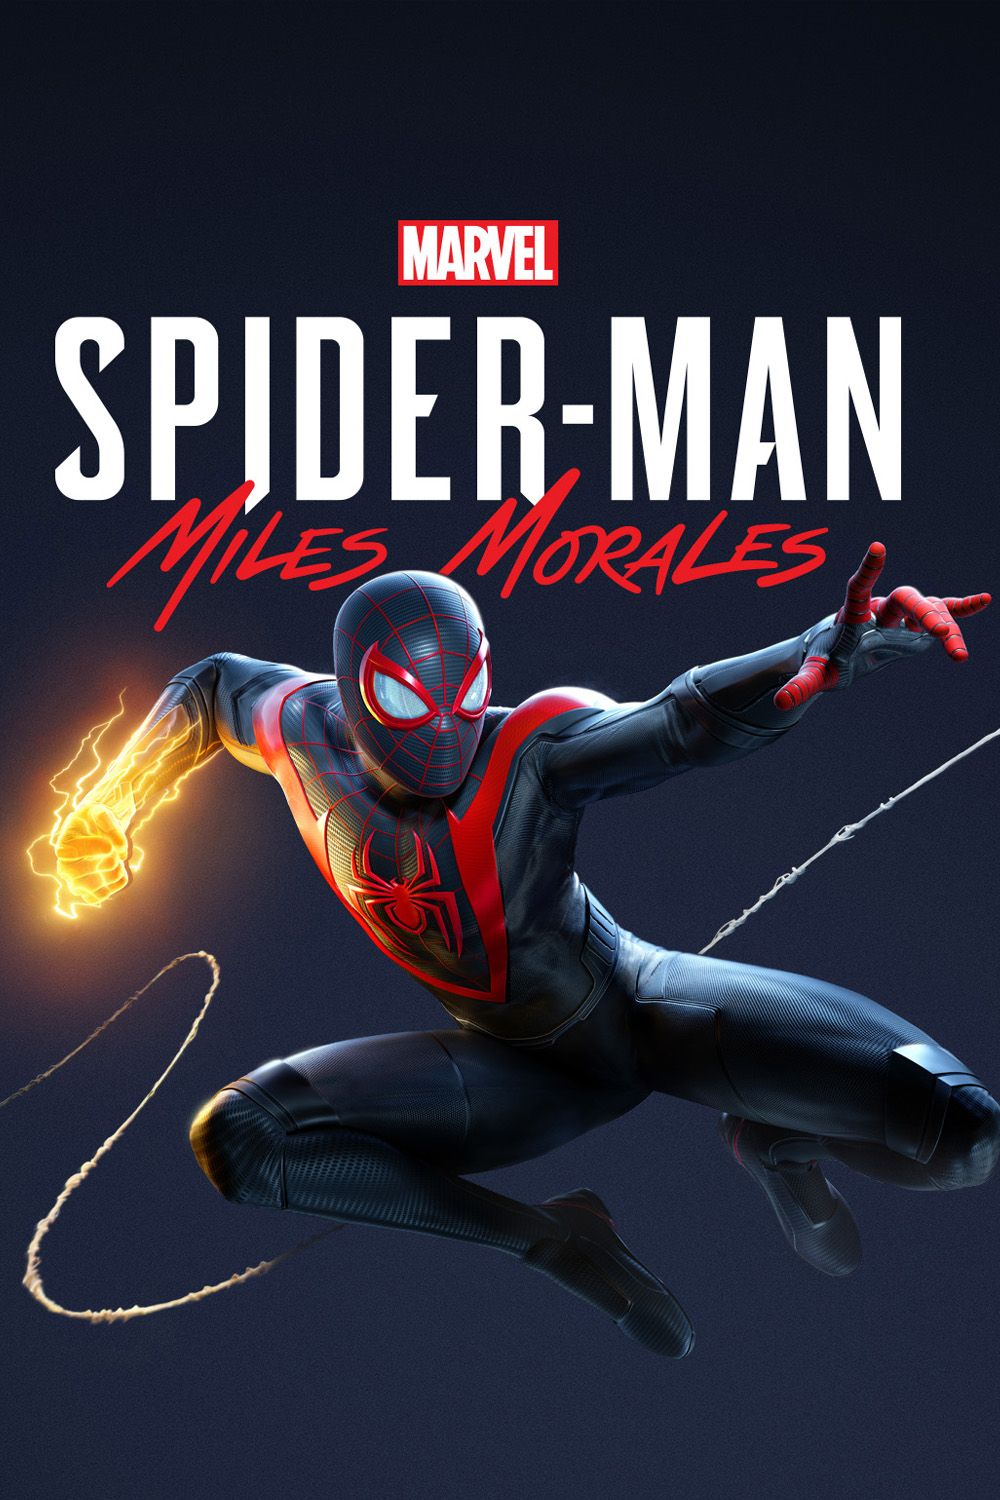 MARVEL'S SPIDER-MAN MILES MORALES